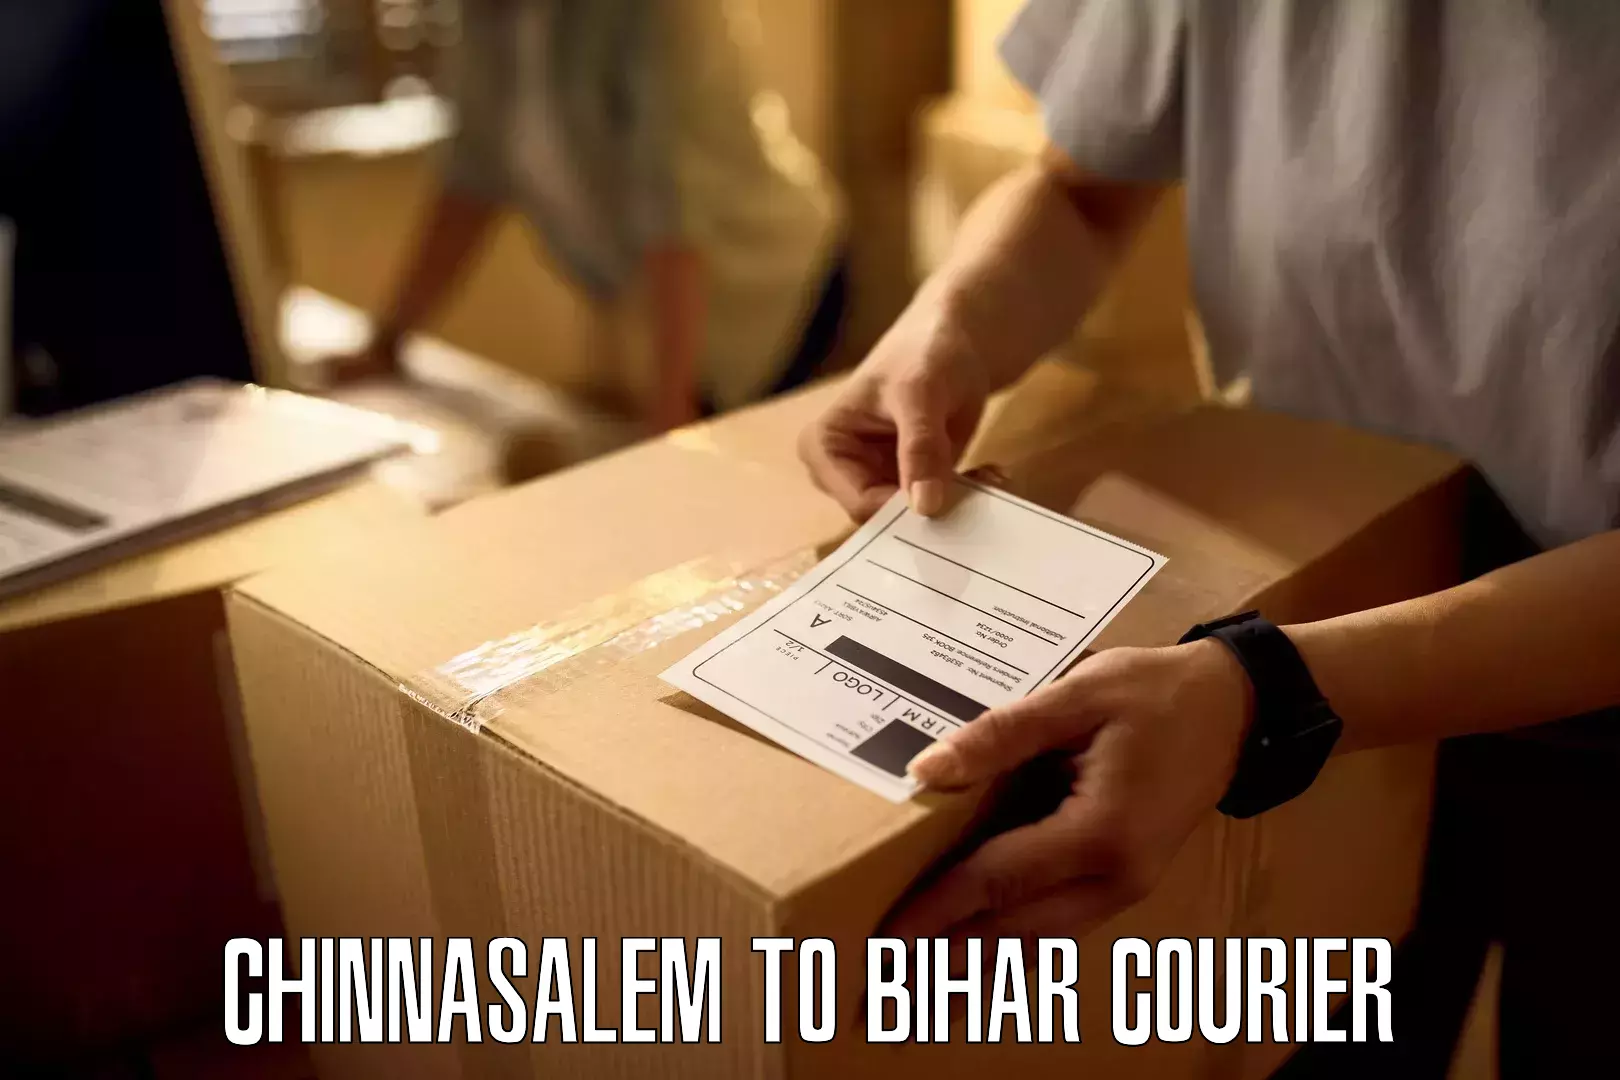 Modern delivery methods Chinnasalem to Fatwah